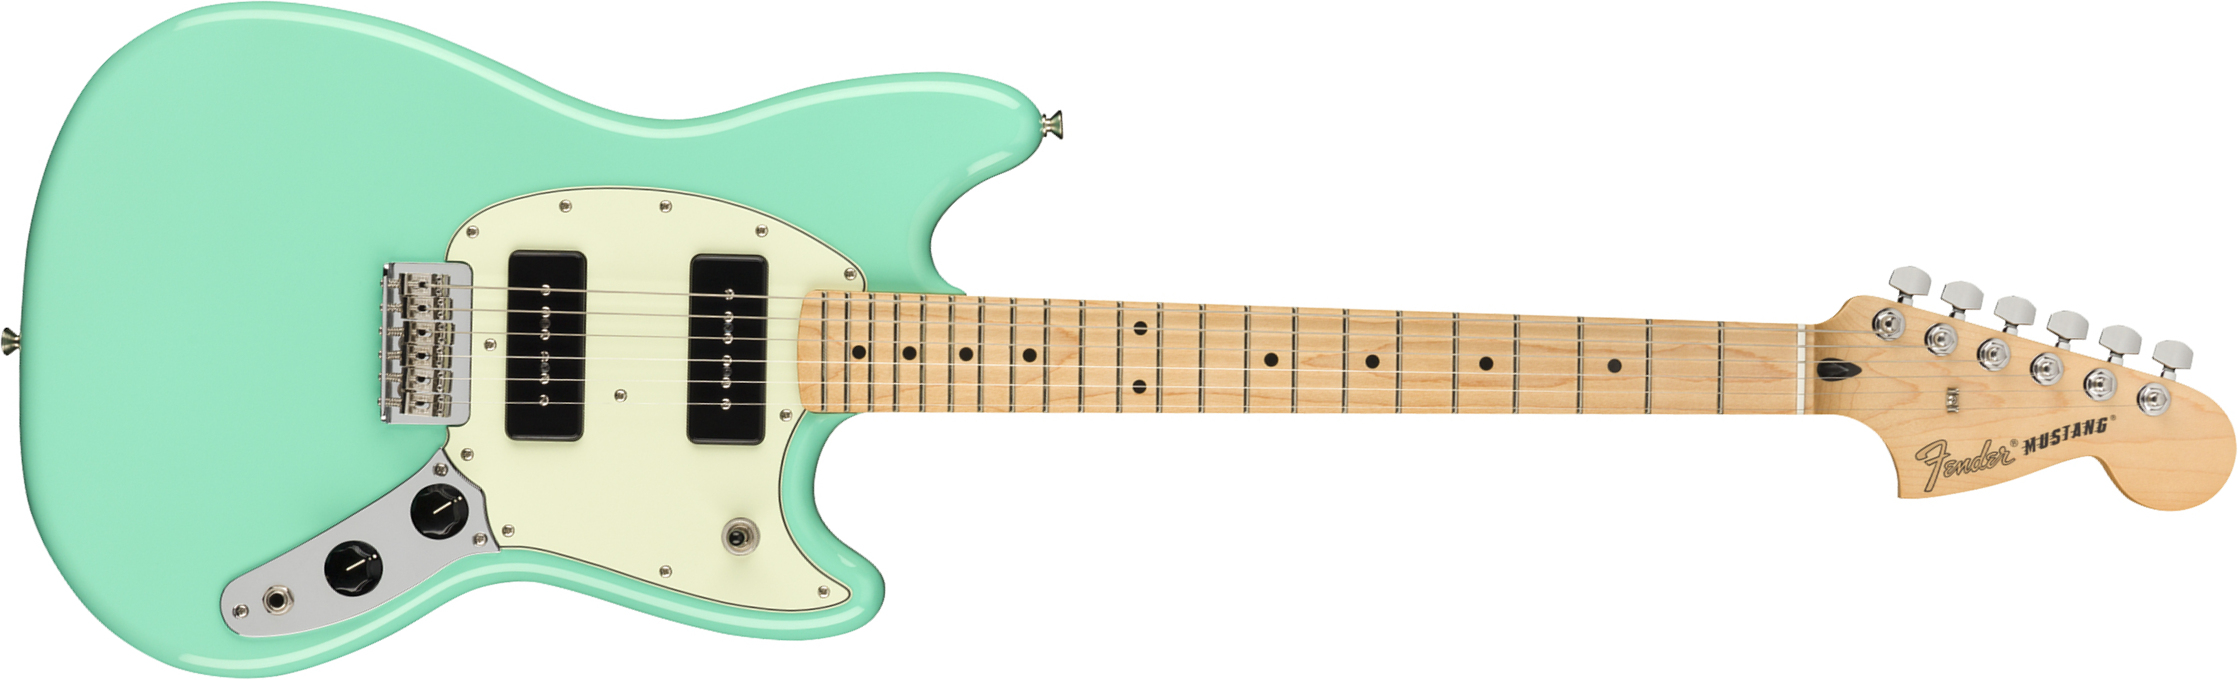 Fender Mustang Player 90 Mex Ht 2p90 Mn - Seafoam Green - Guitarra electrica retro rock - Main picture